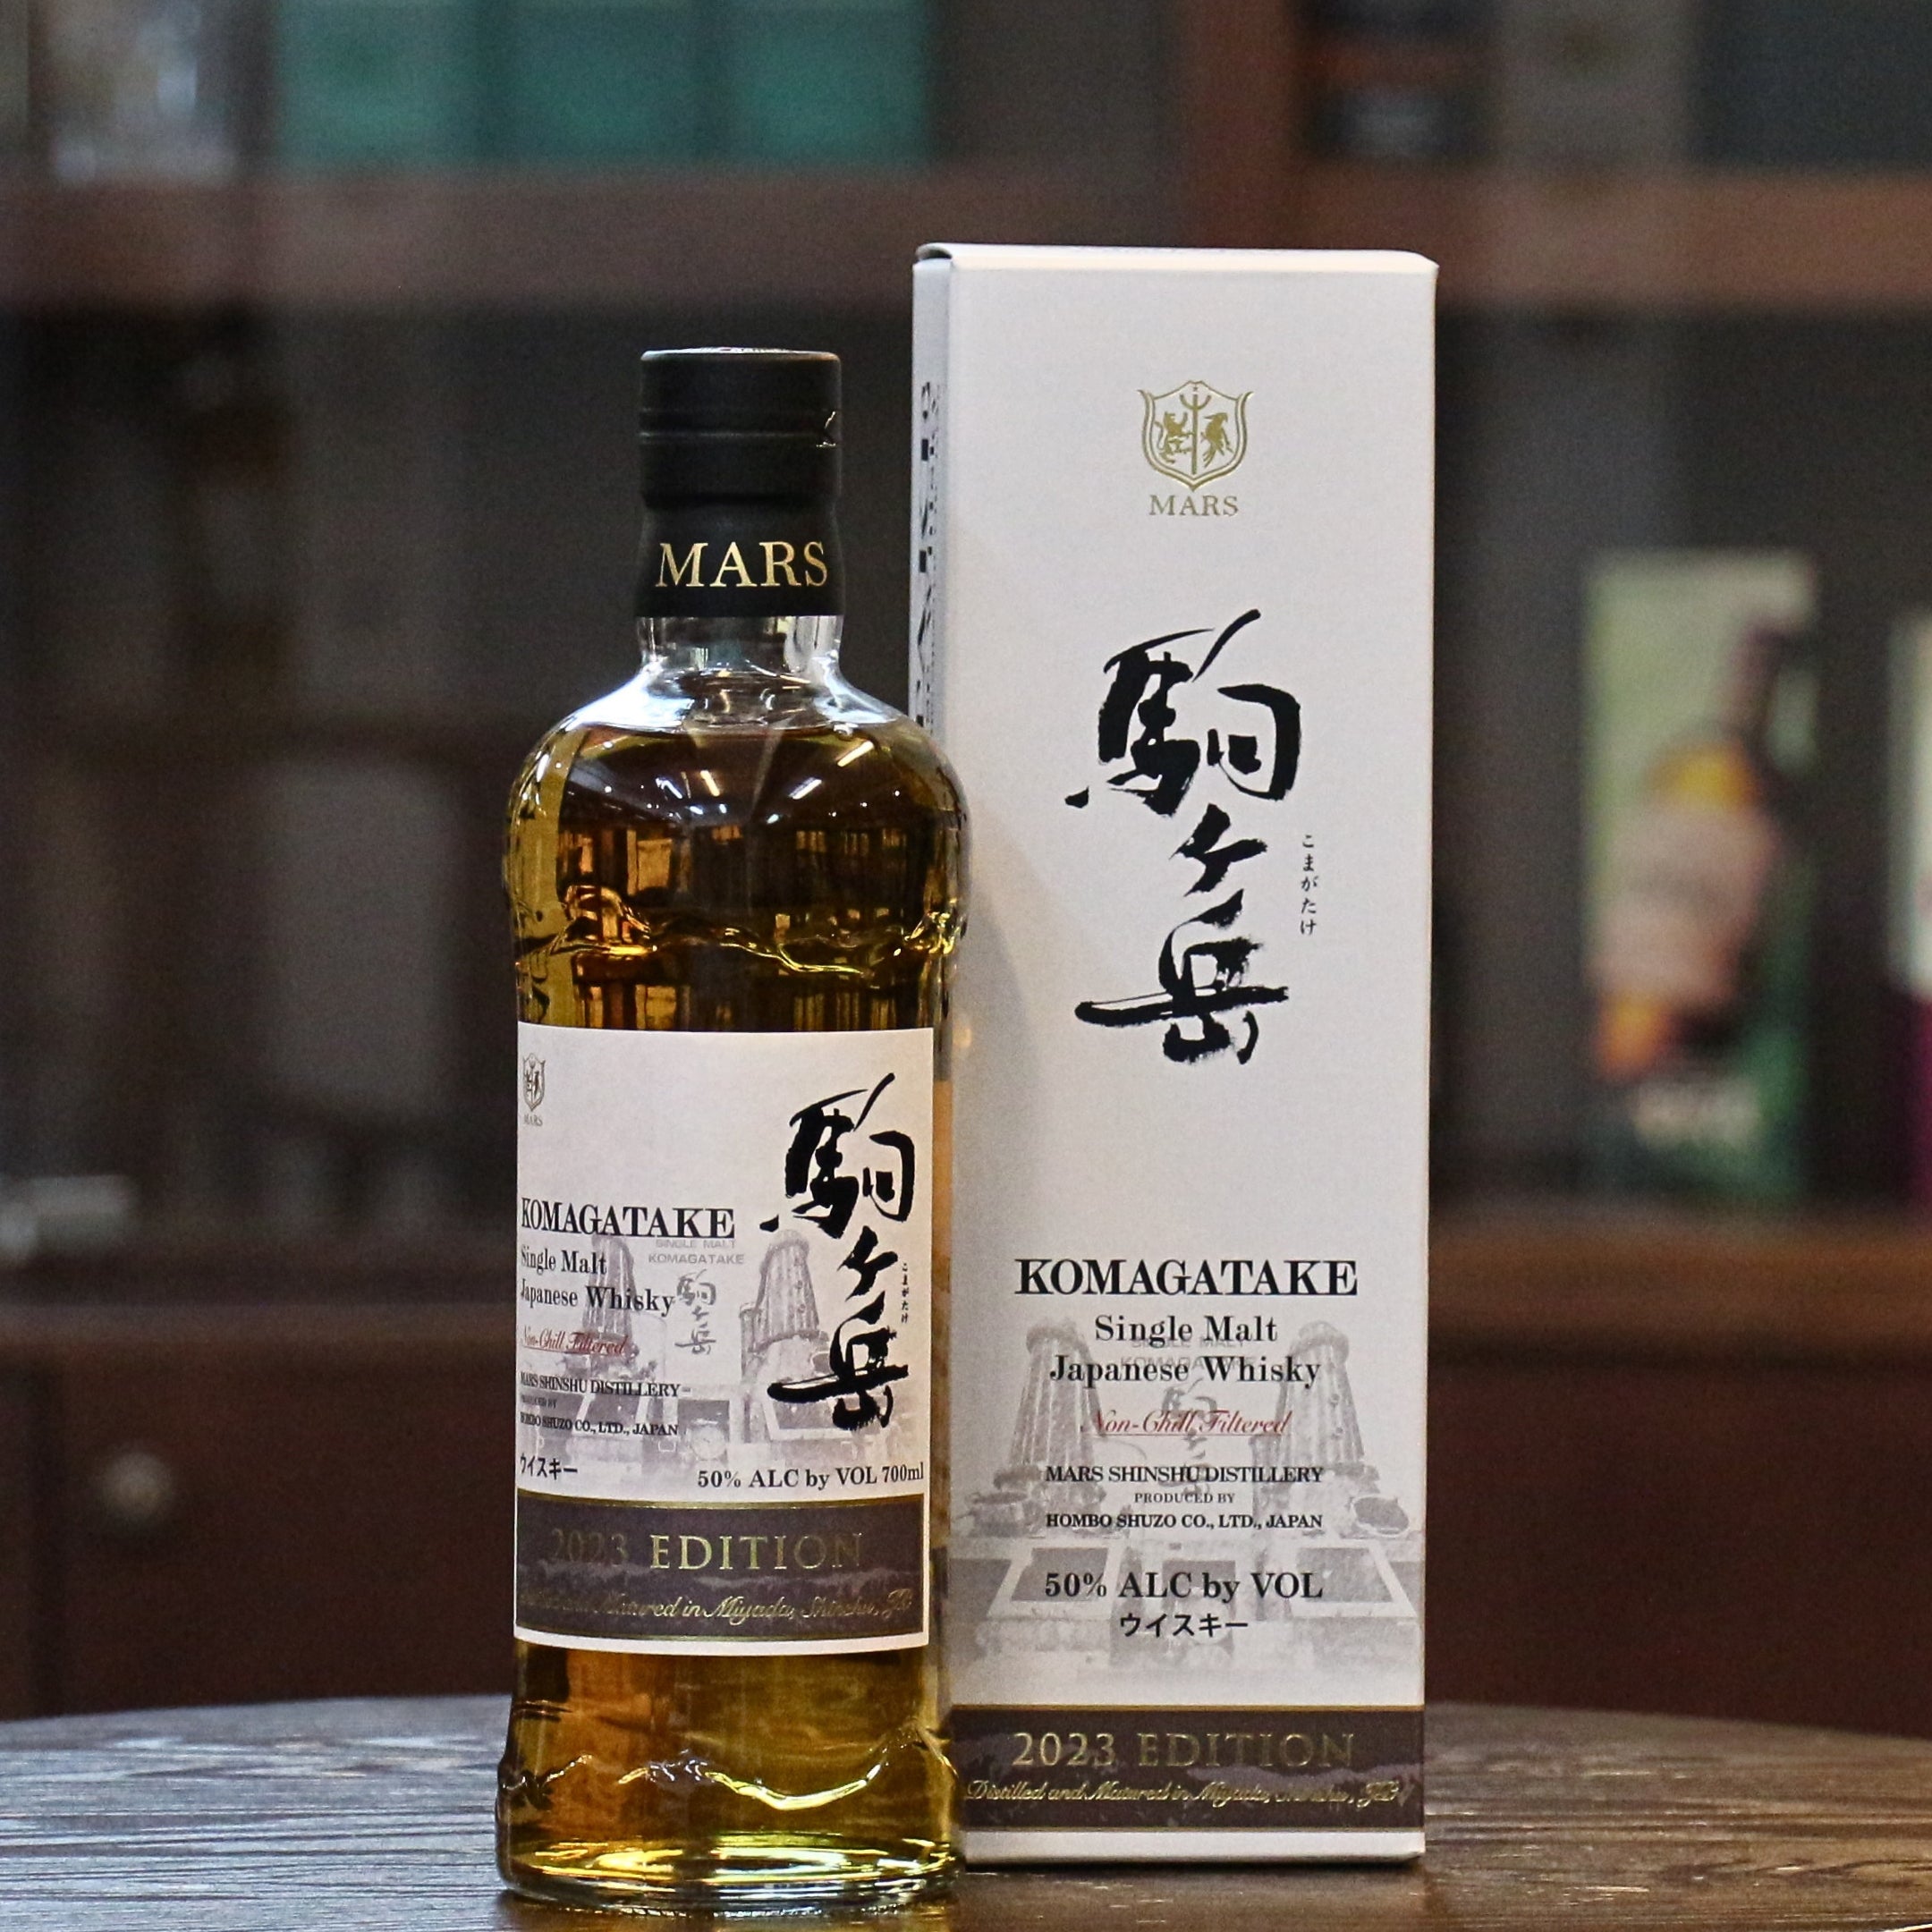 Mars Komagatake  2023 Edition Single Malt Japanese Whisky